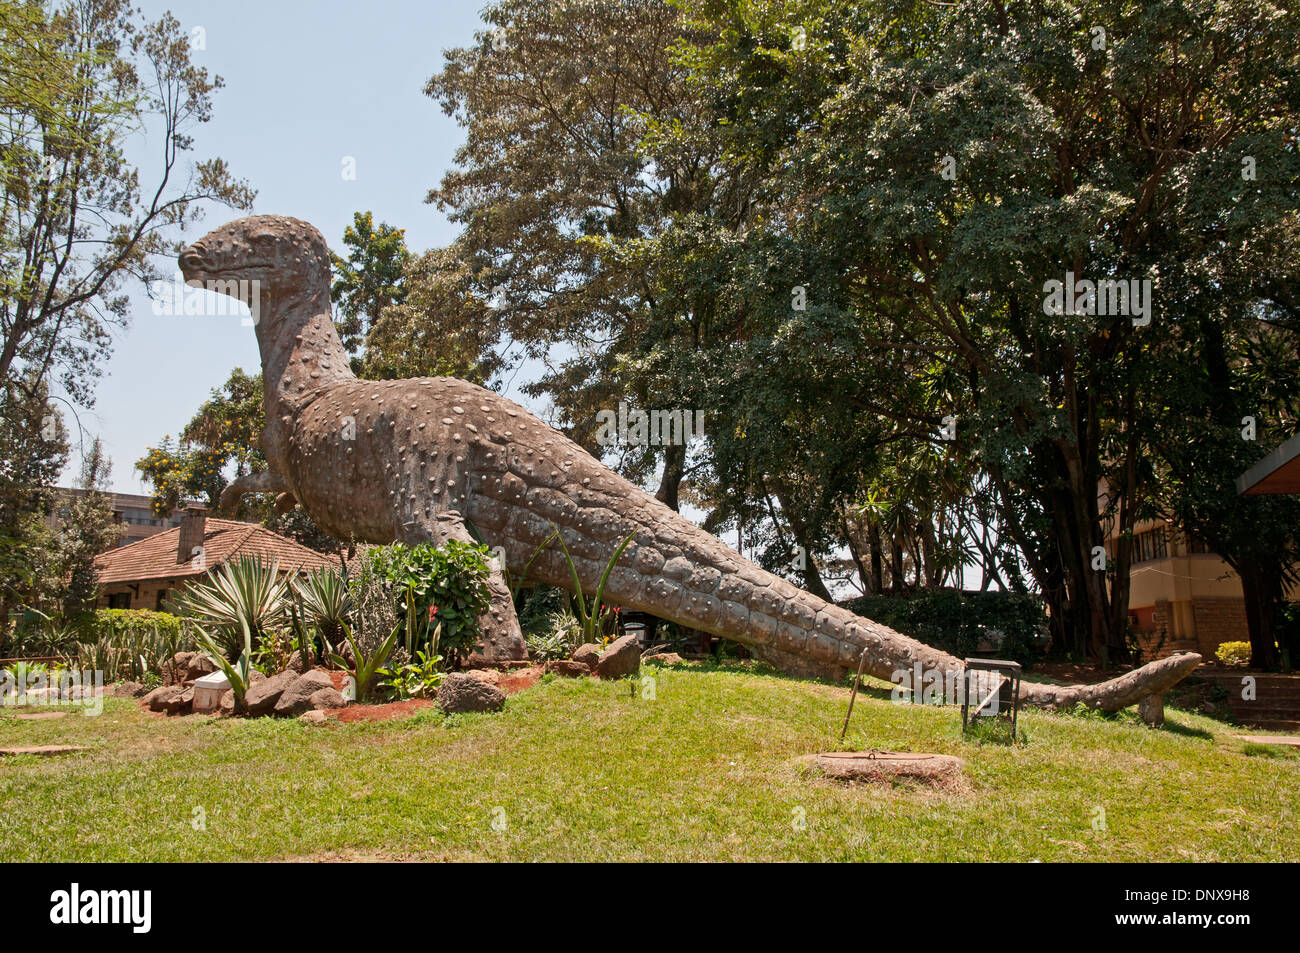 Statue de dinosaure effigie en dehors de Nairobi Kenya Afrique du Musée National Banque D'Images